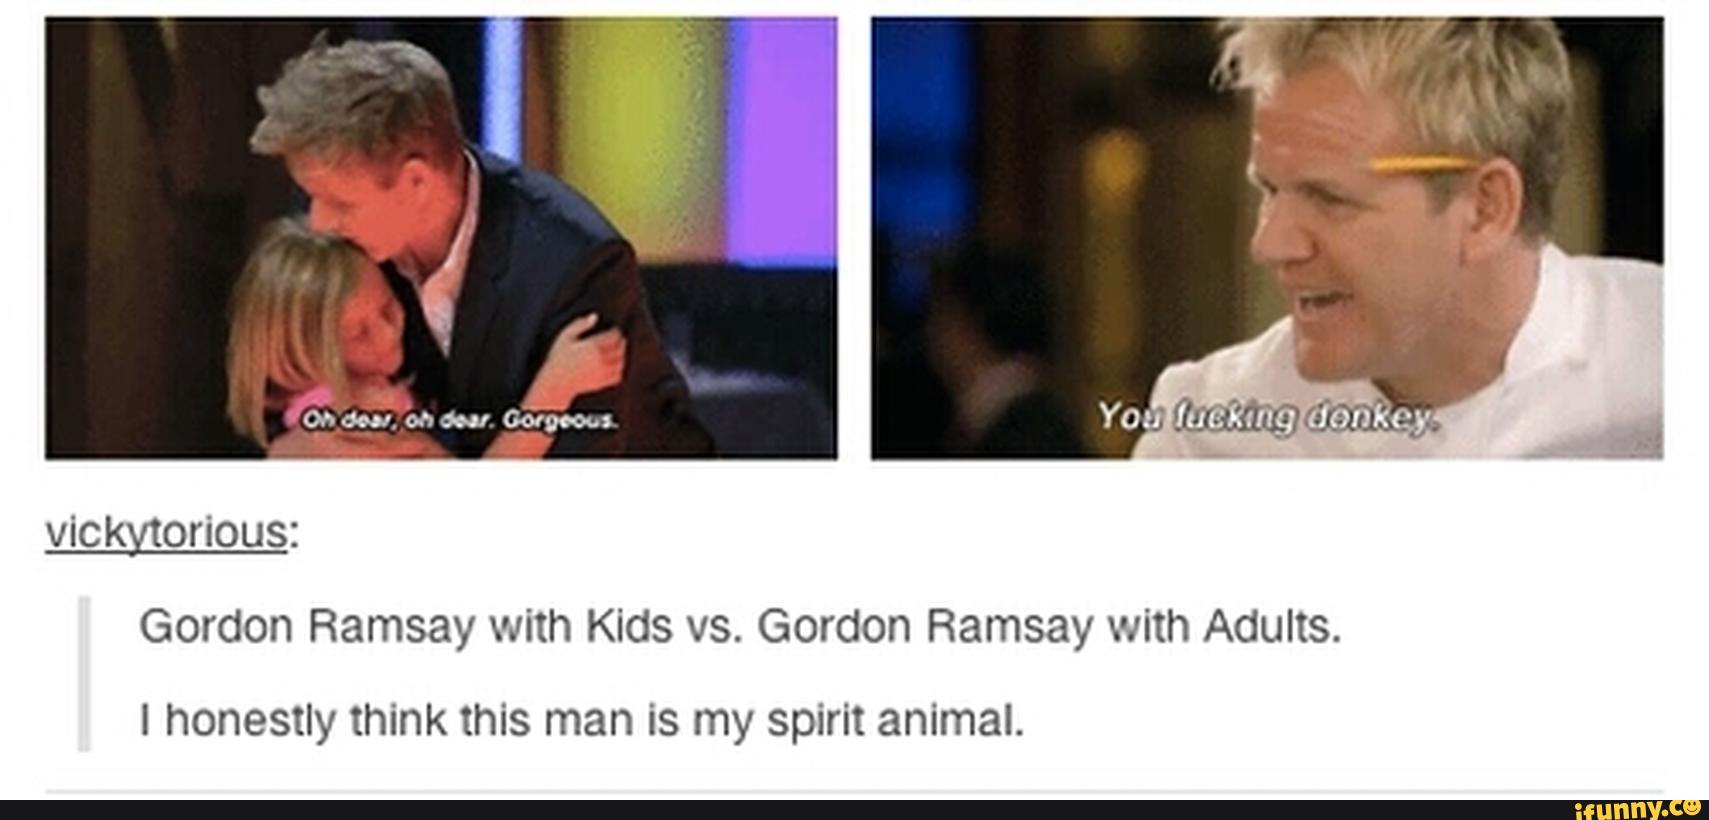 vicmorious: Gordon Ramsay with Kids vs. Gordon Ramsay with Adults. 